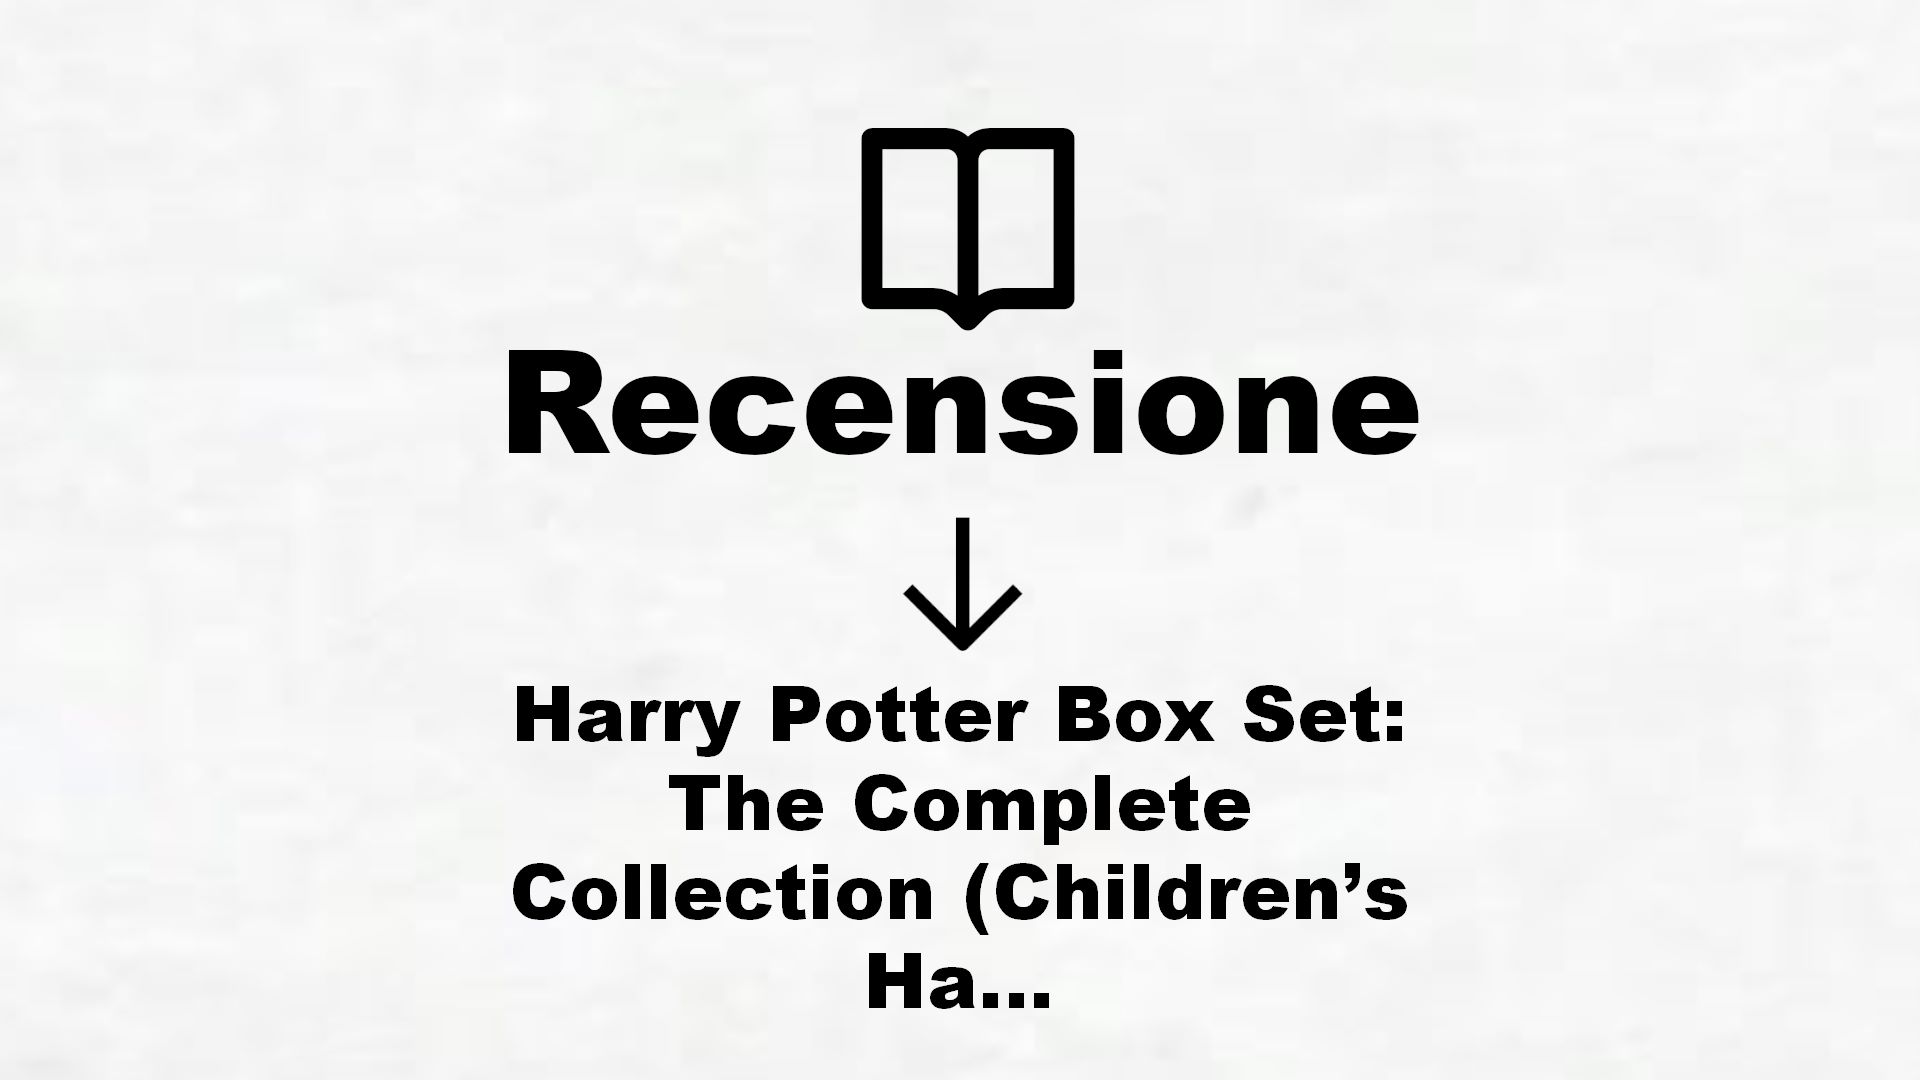 Harry Potter Box Set: The Complete Collection (Children’s Hardback) – Recensione Libro